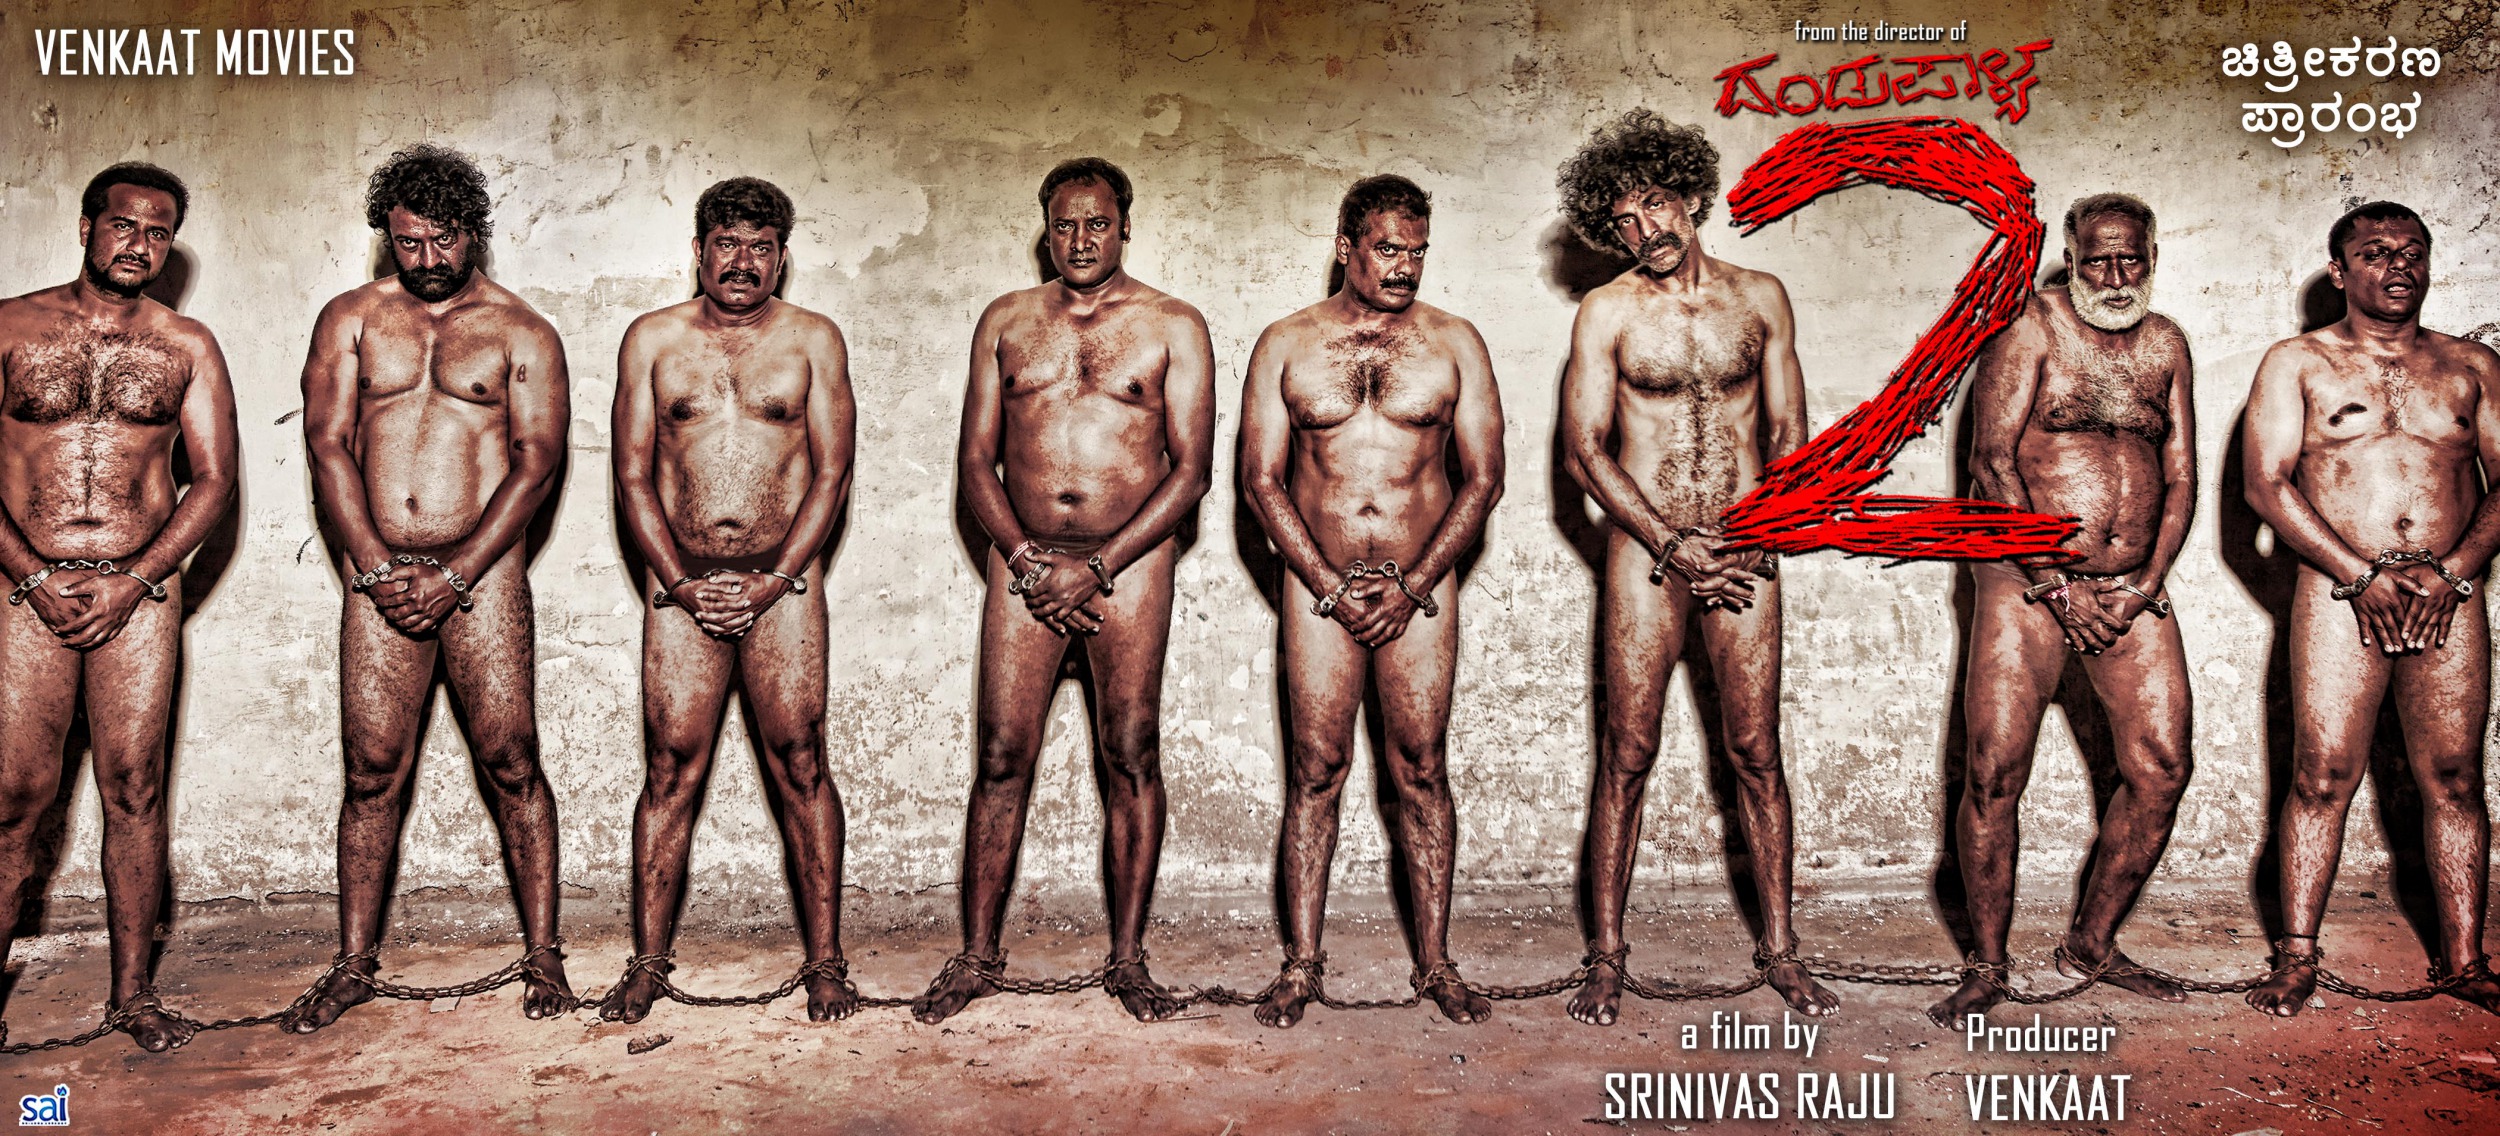 Mega Sized Movie Poster Image for Dhandupalya 2 (#3 of 8)